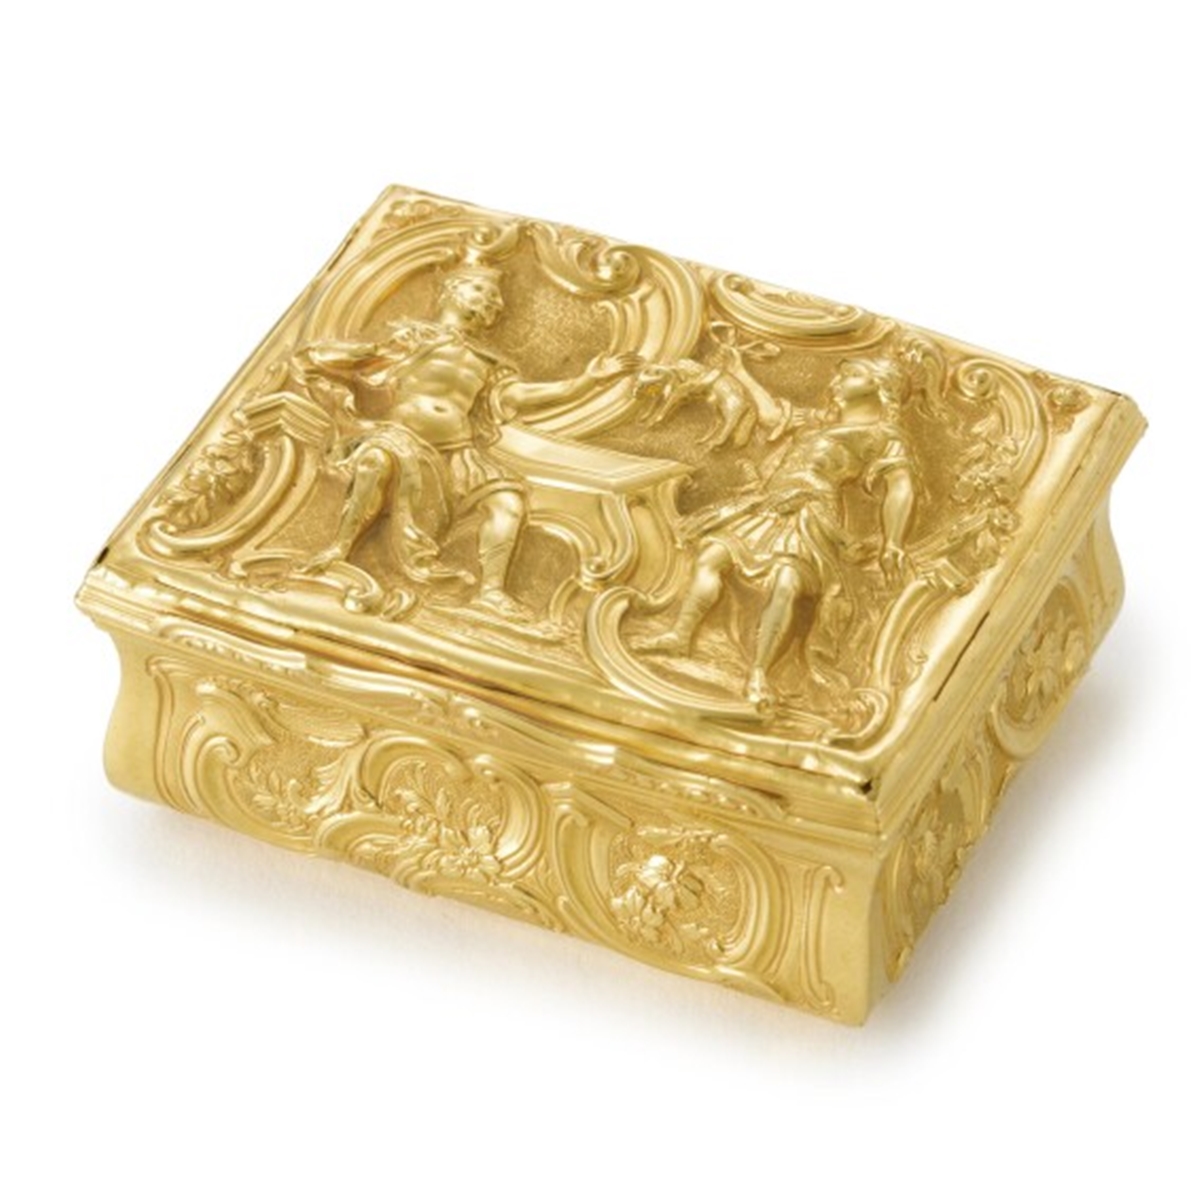 A George II Gold Snuff box